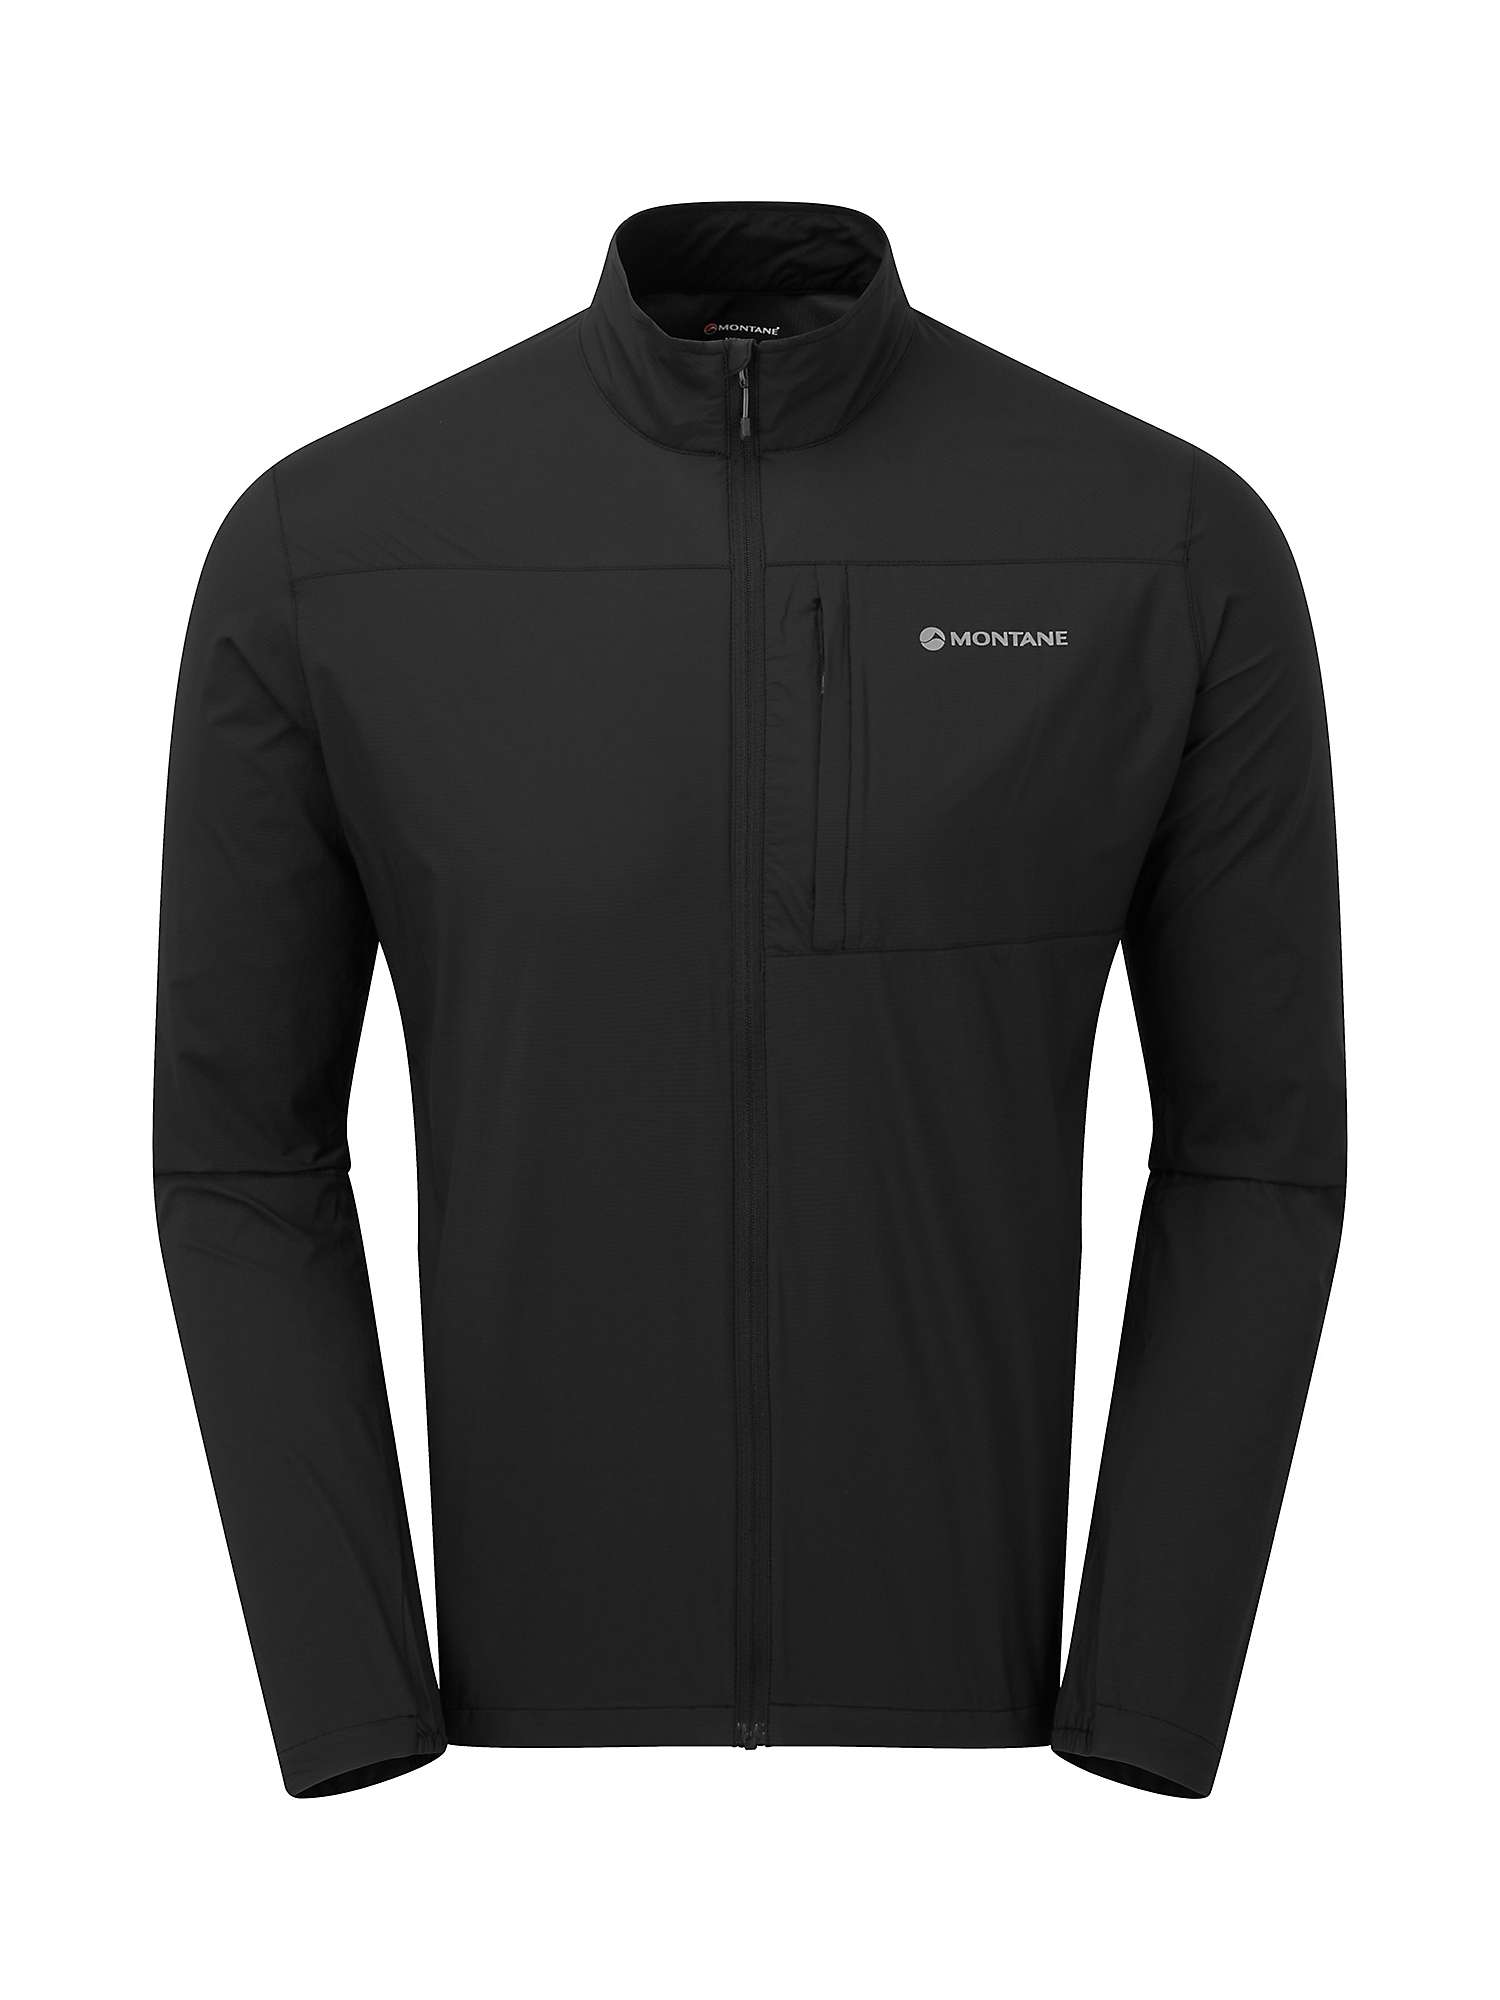 Buy Montane Featherlite Windproof Jacket Online at johnlewis.com